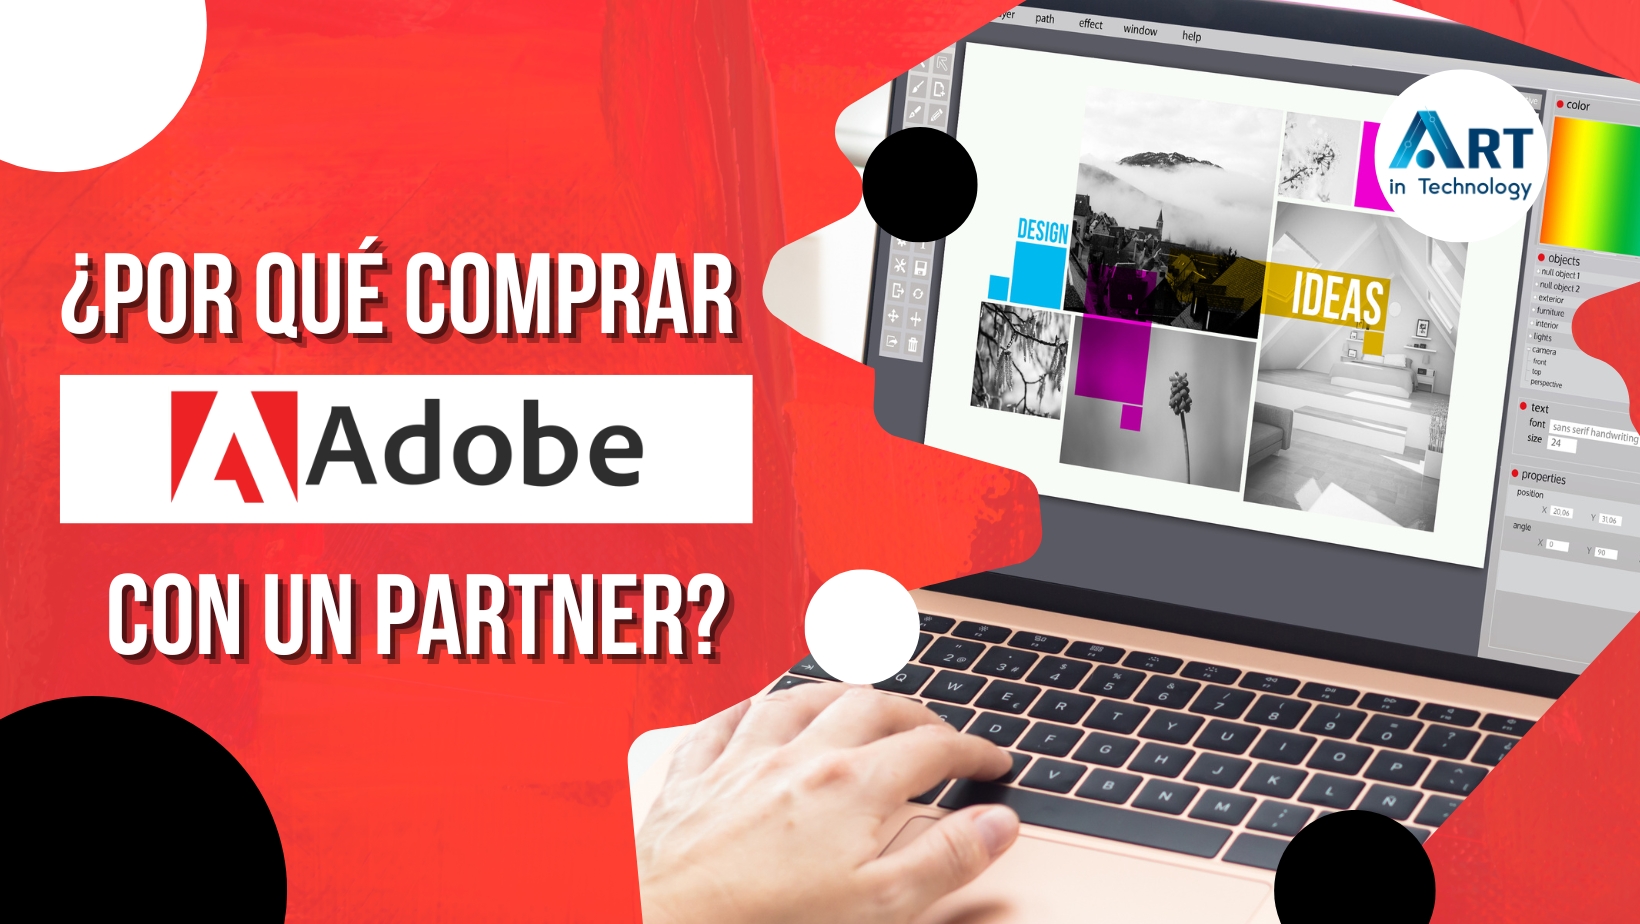 Comprar-Adobe.jpg